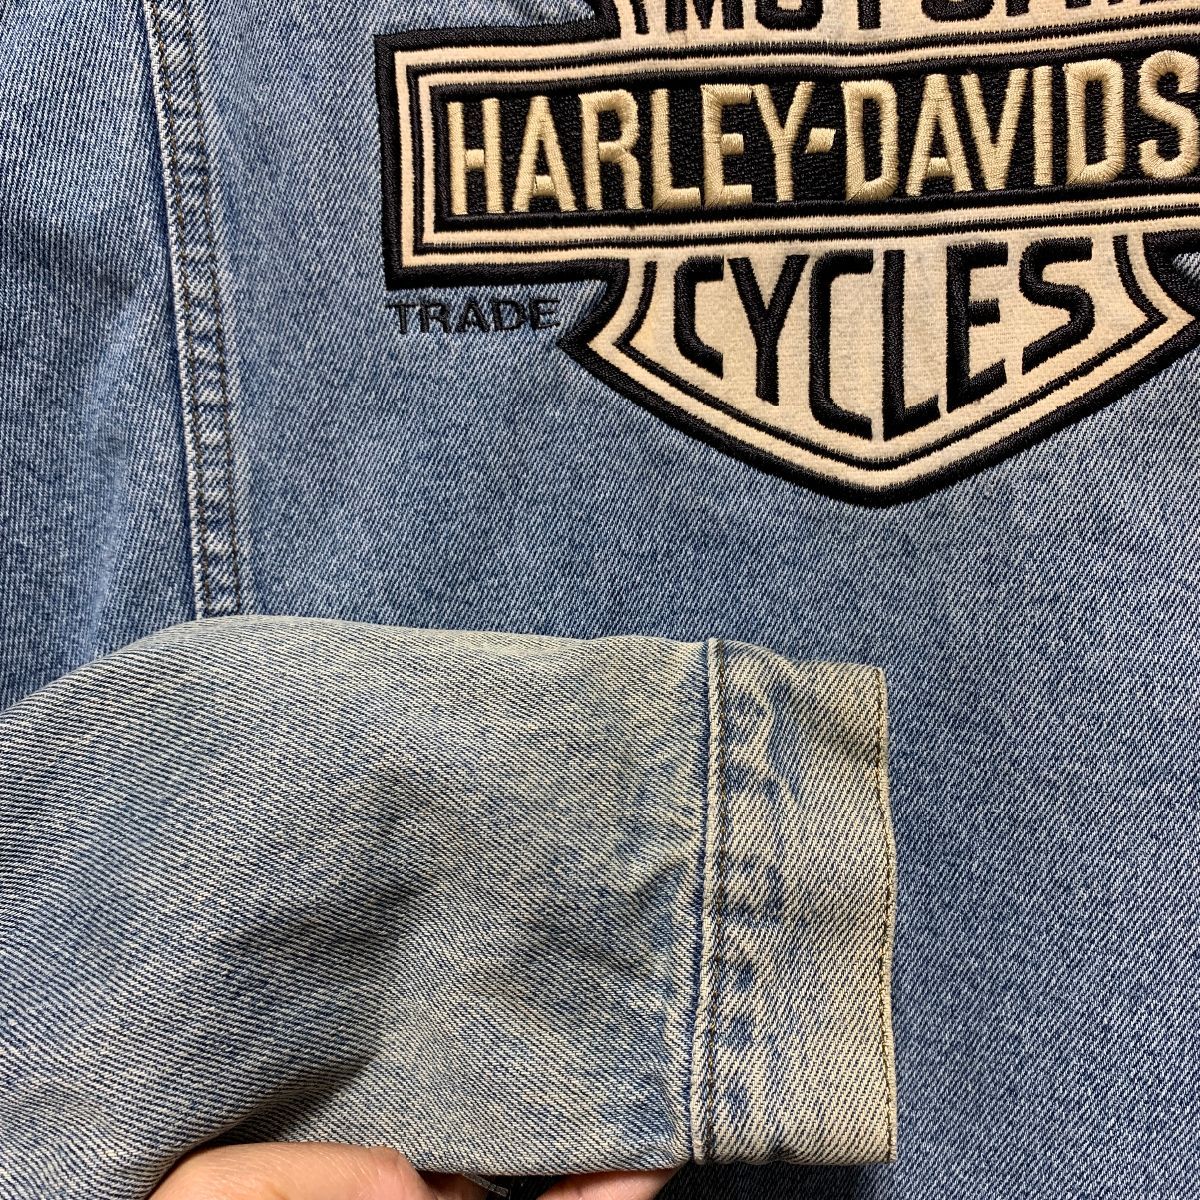 Harley Davidson Denim \\biker Blues\\ Trucker Jacket | Boardwalk Vintage